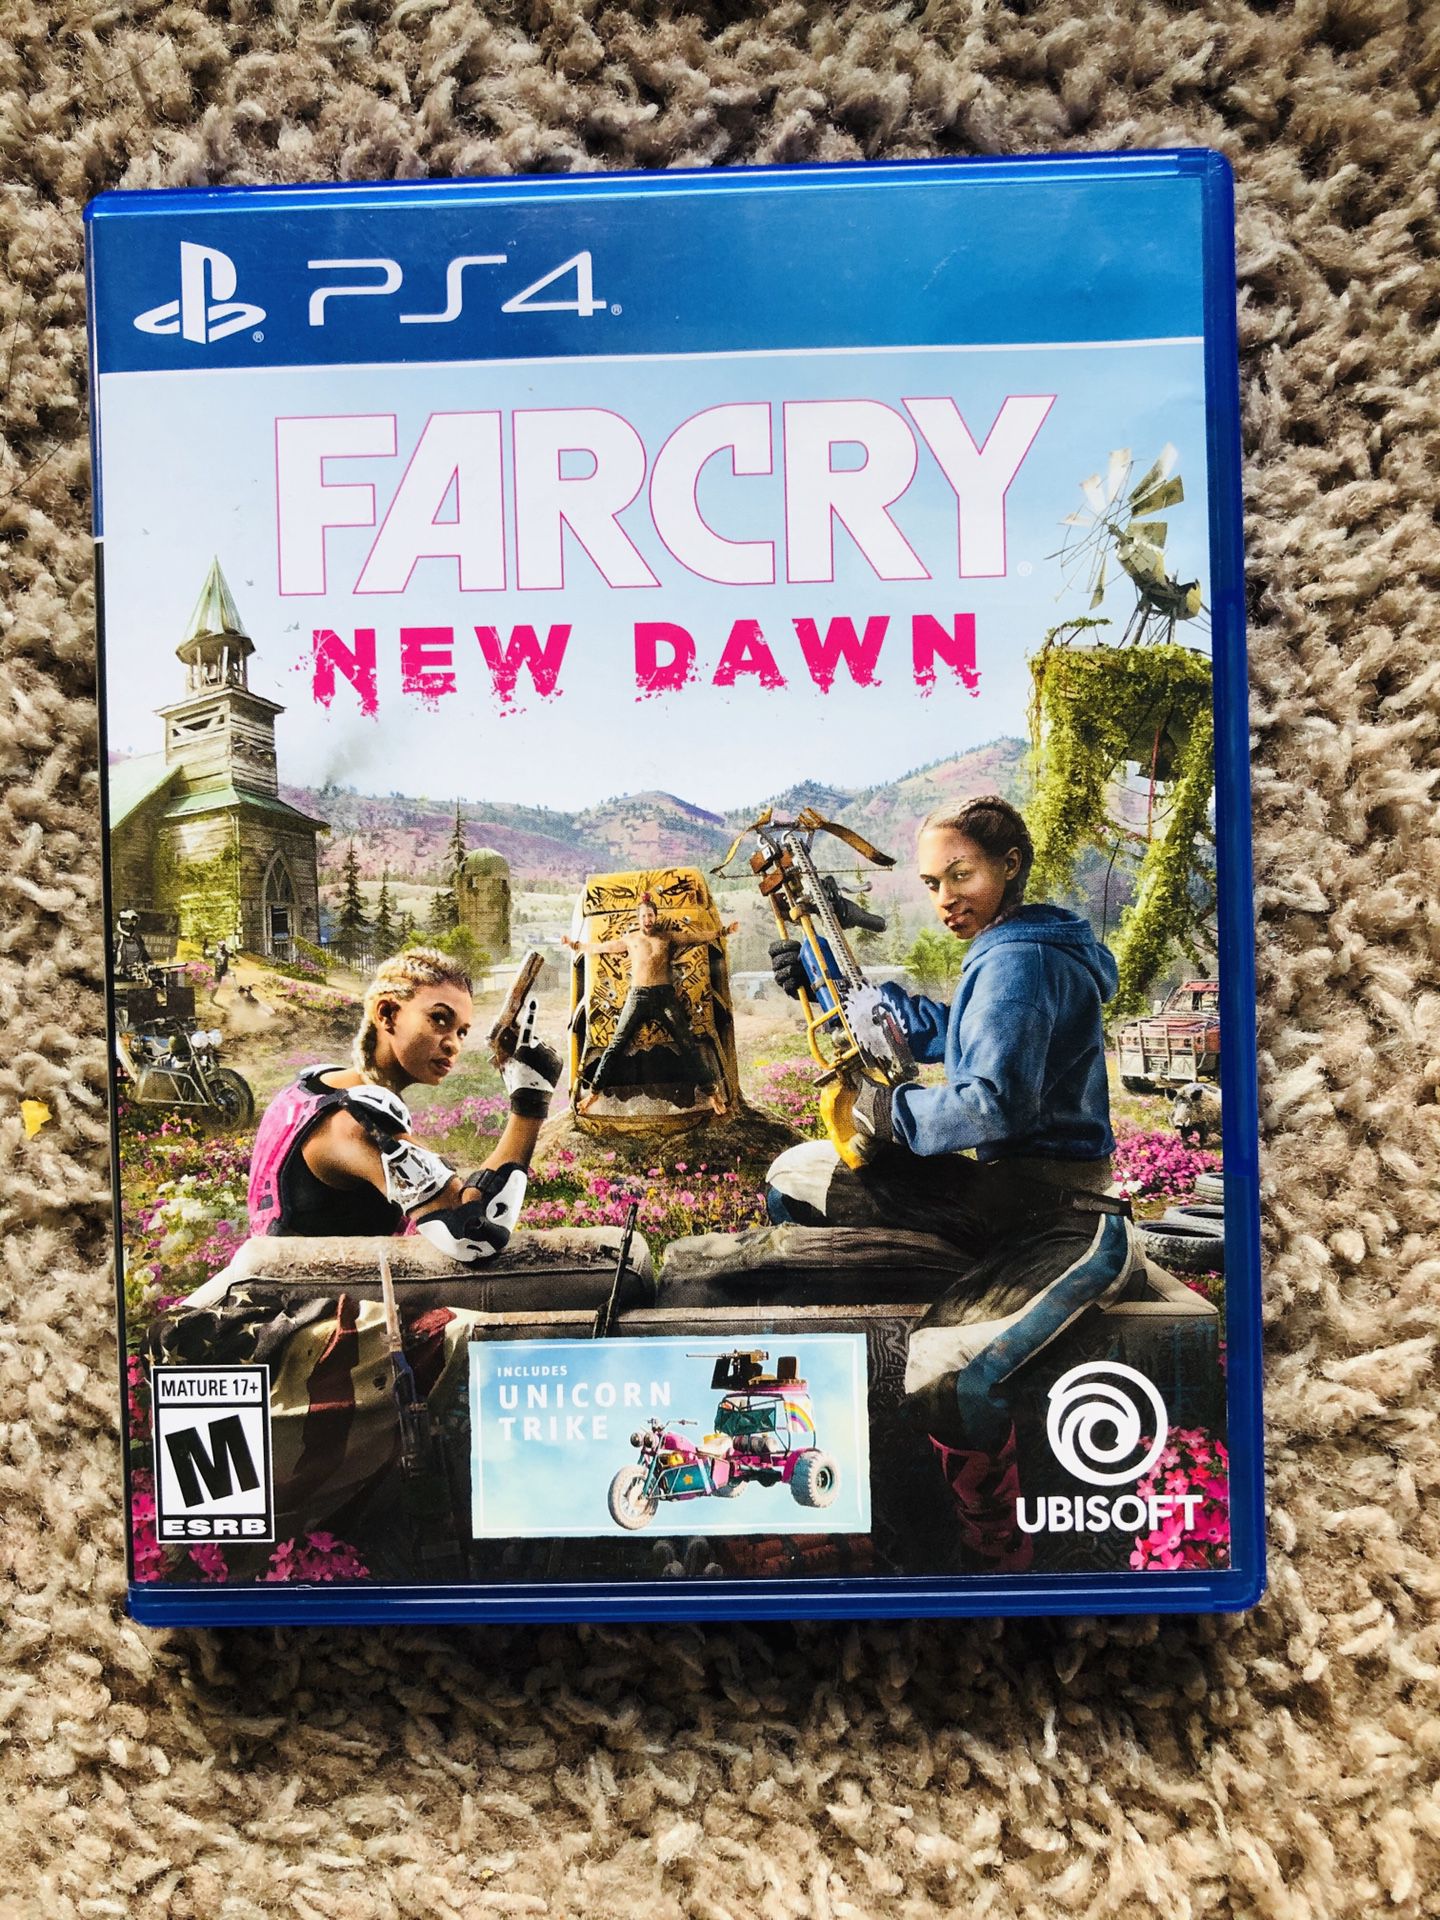 PS4 Far cry: New dawn